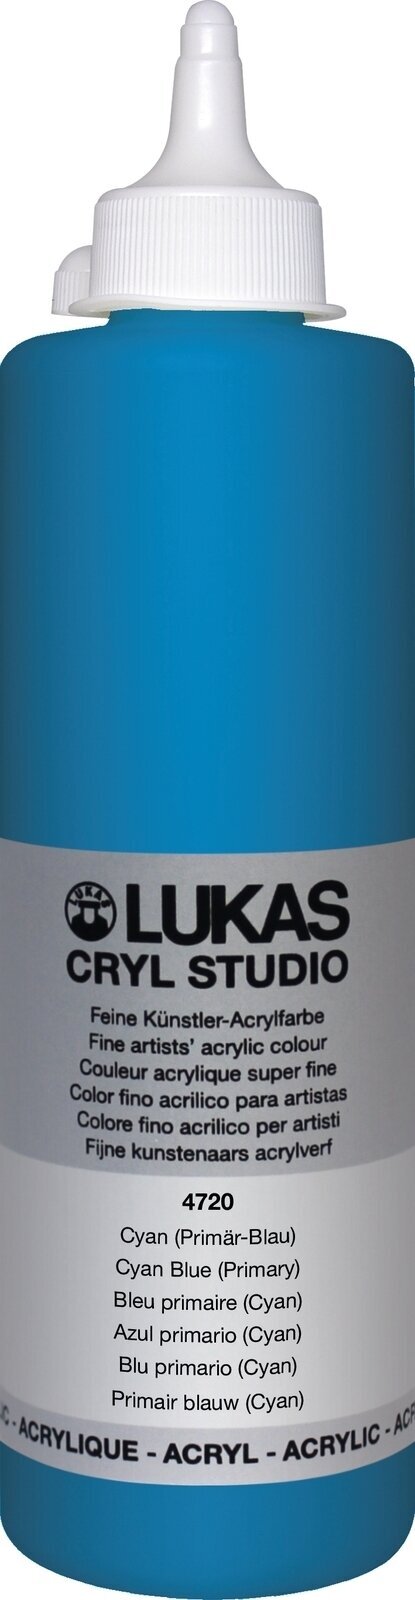 Pintura acrílica Lukas Cryl Studio Acrylic Paint 500 ml Cyan Blue (Primary) Pintura acrílica